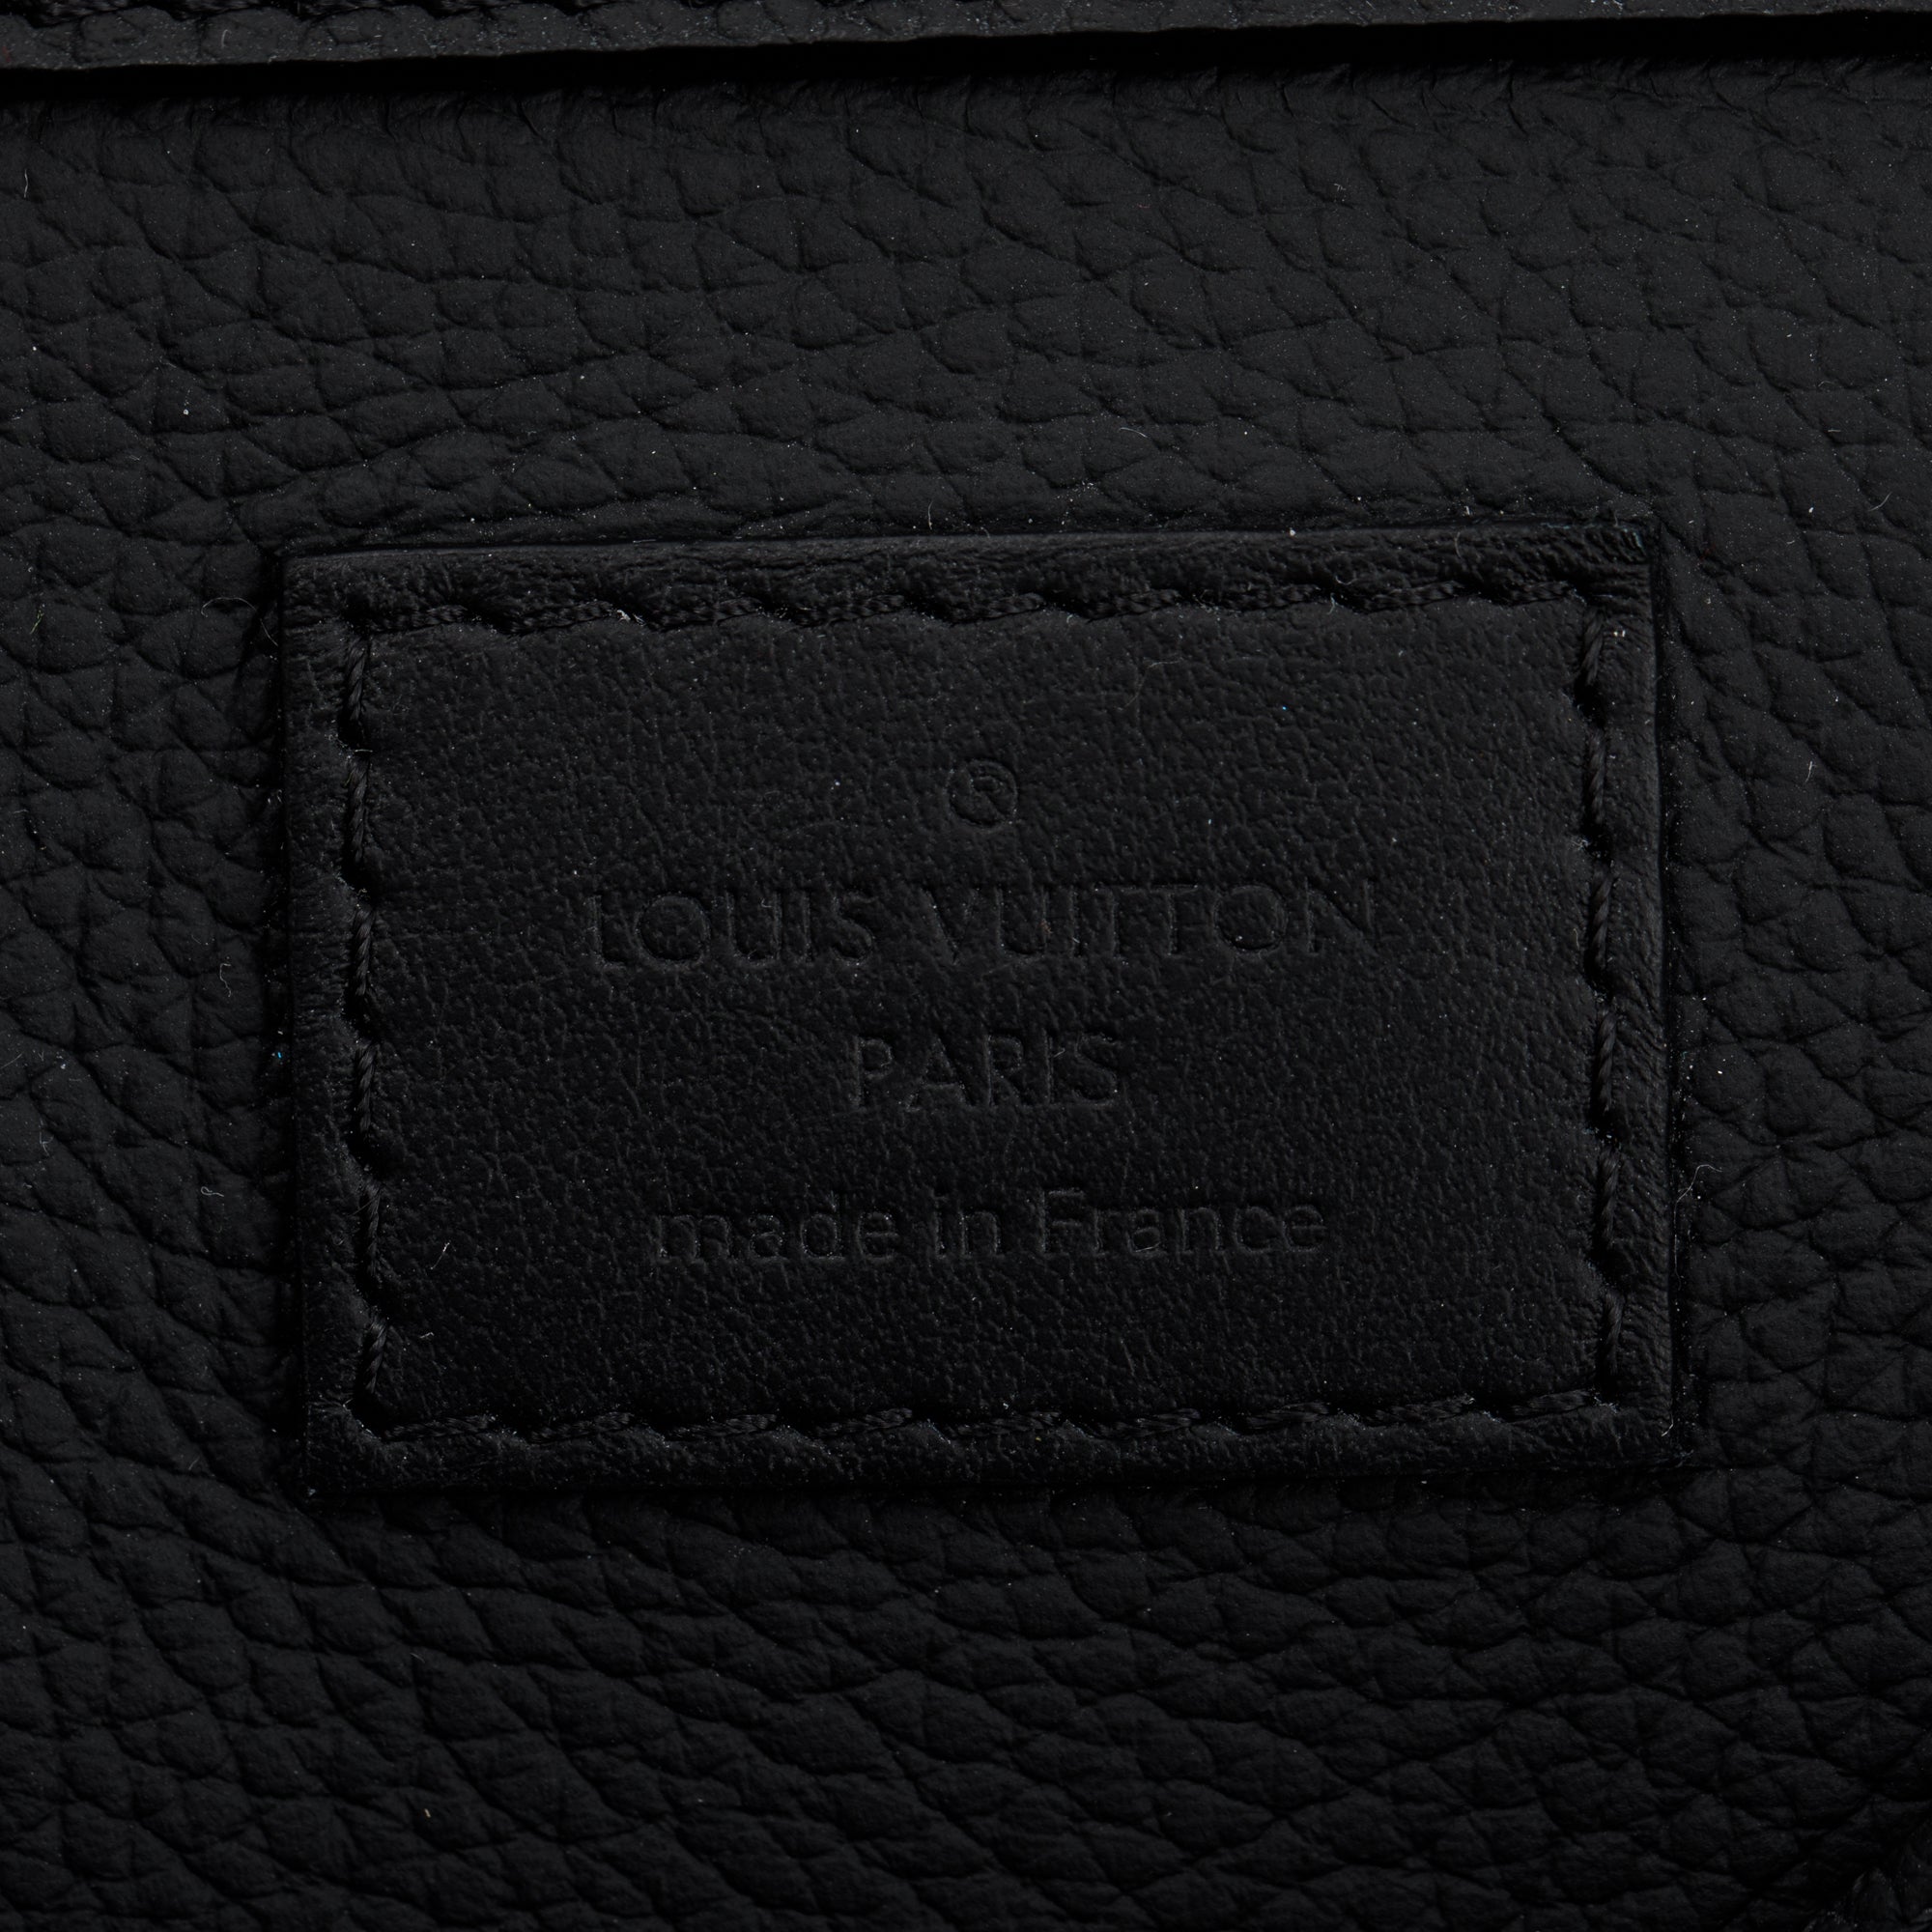 Louis Vuitton Takeoff Slingbag